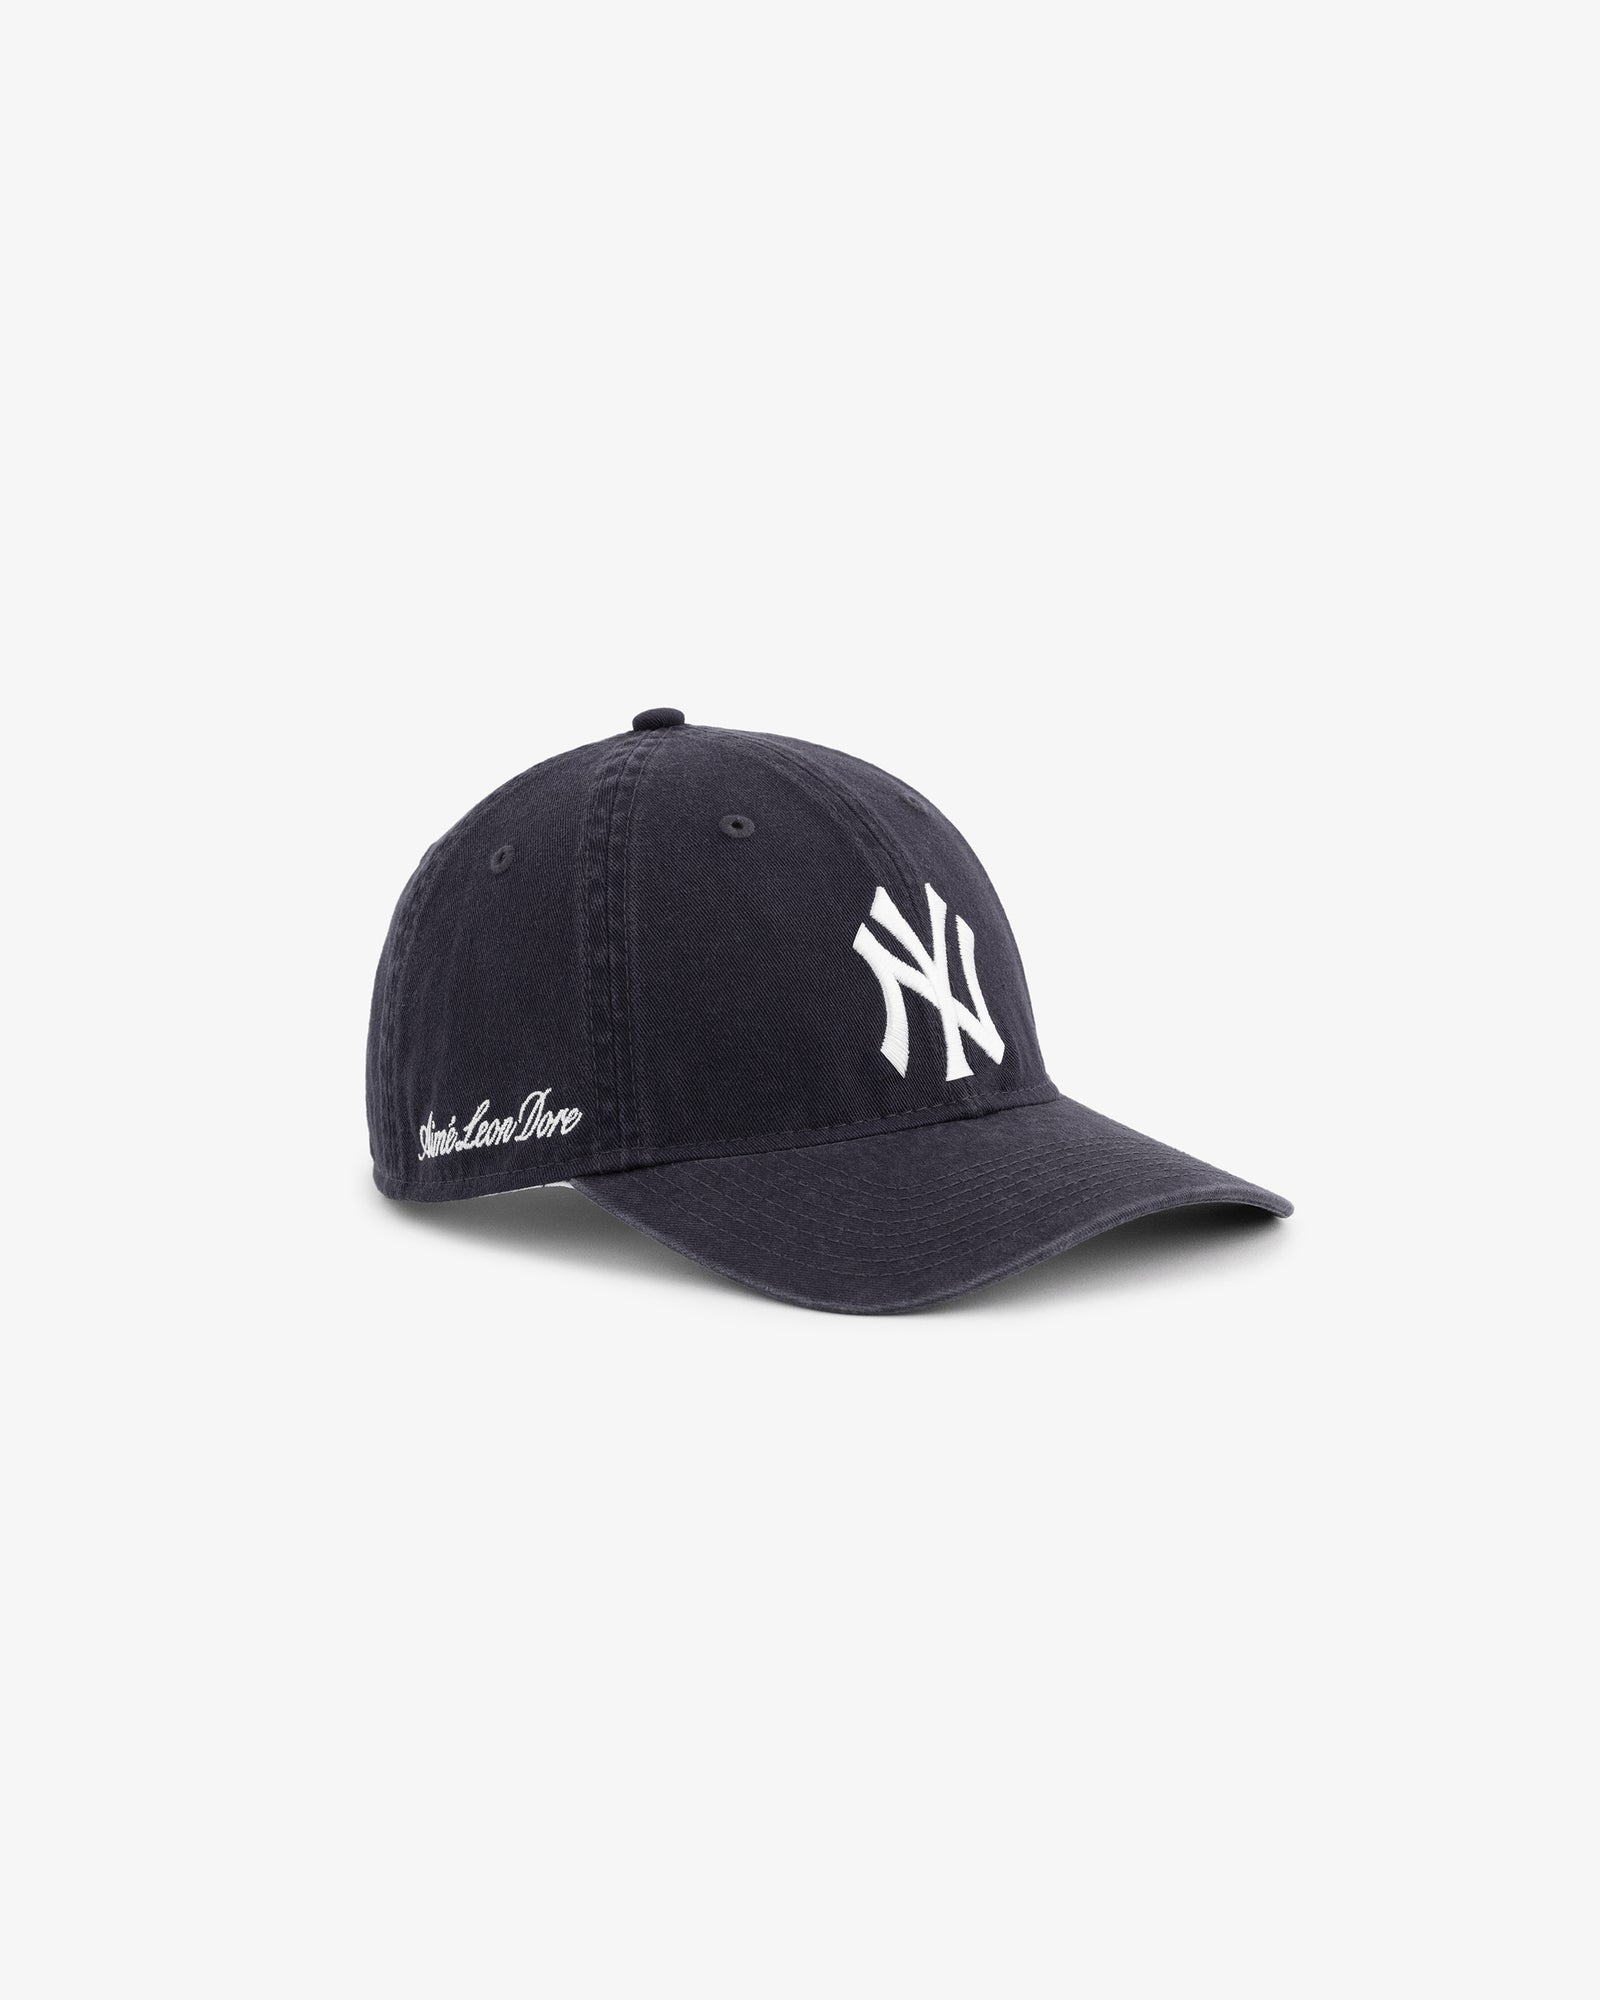 AIME LEON DORE Yankees Ballpark Hat 入手困難 - キャップ